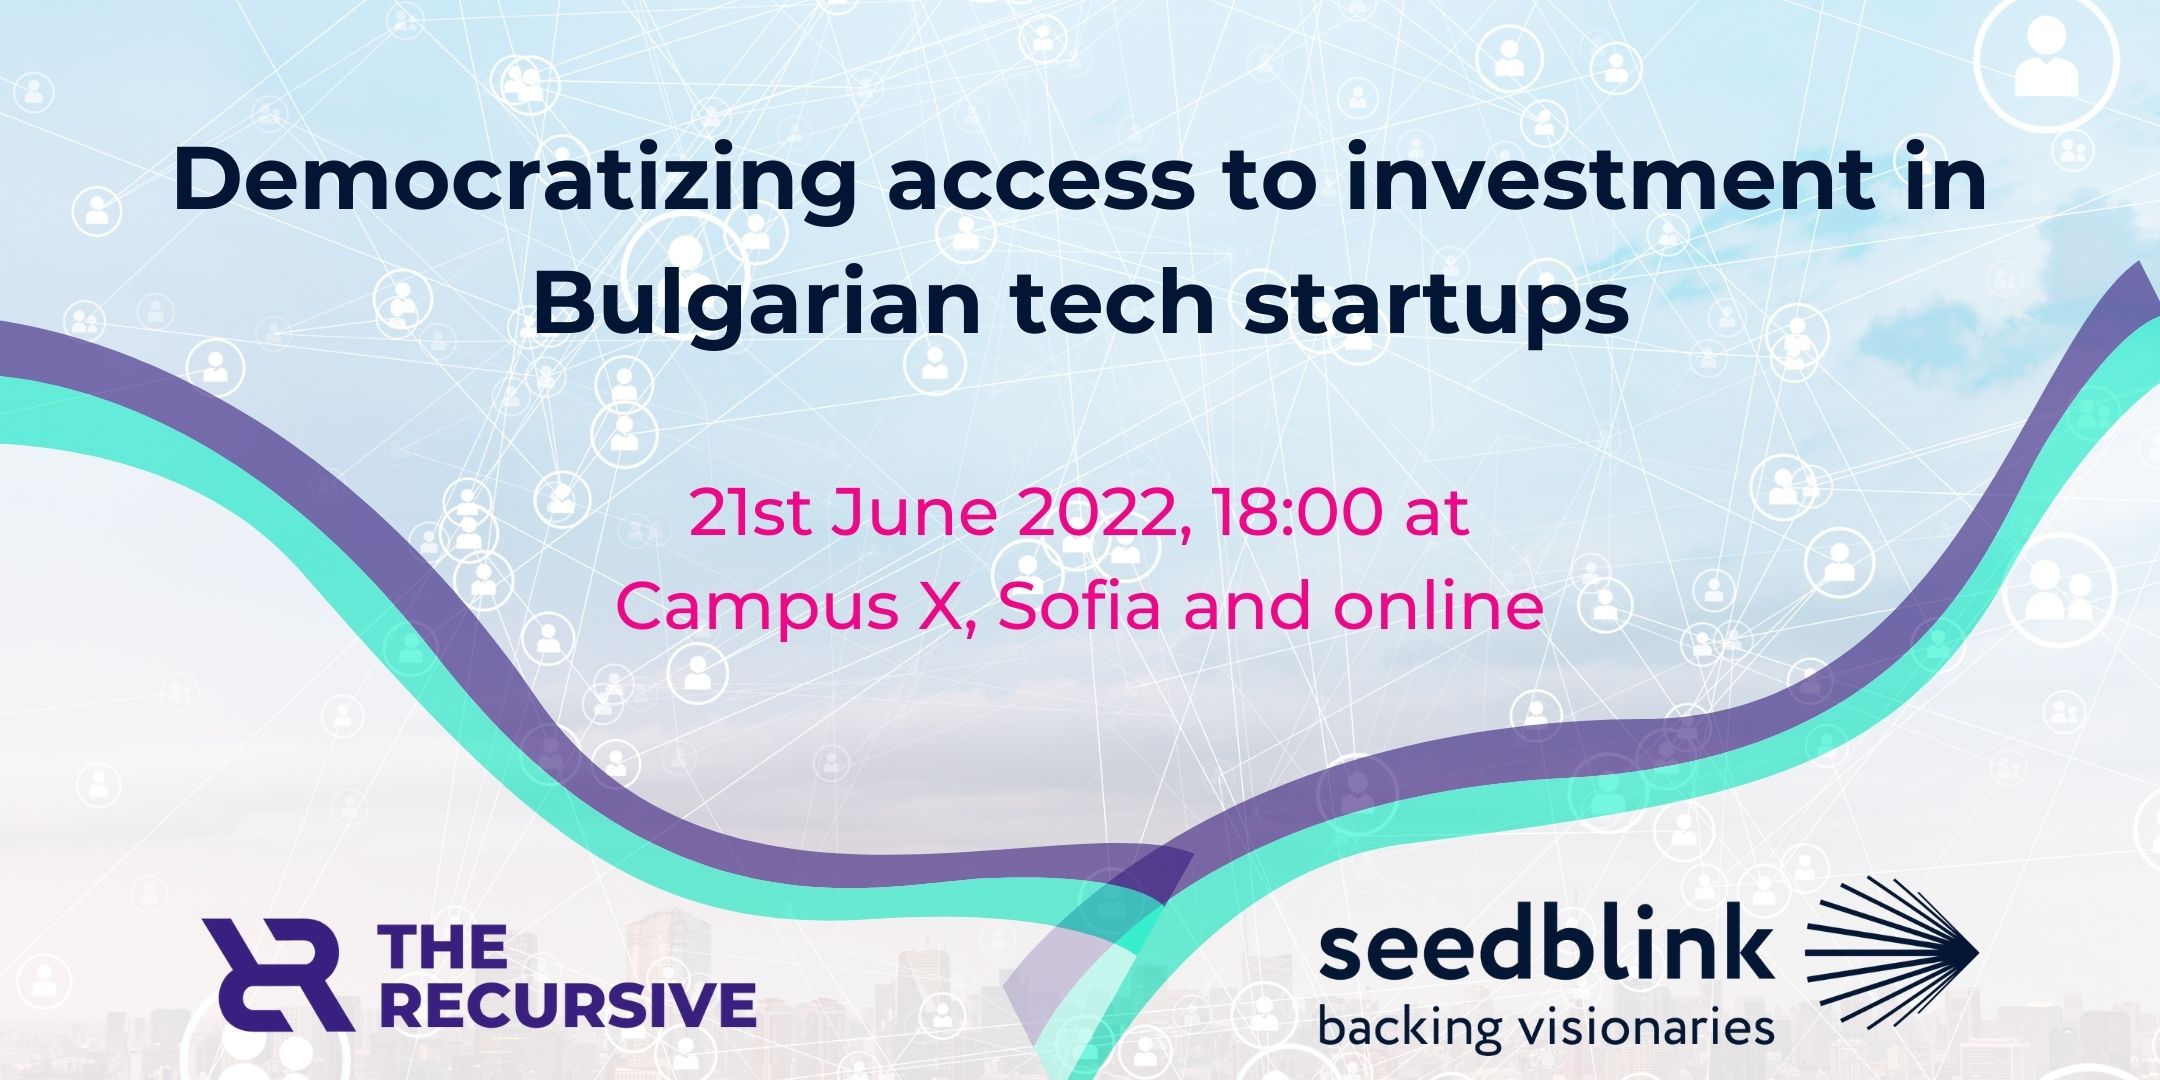 seedblink-event-bulgaria-invest-in-startups-the-recursive